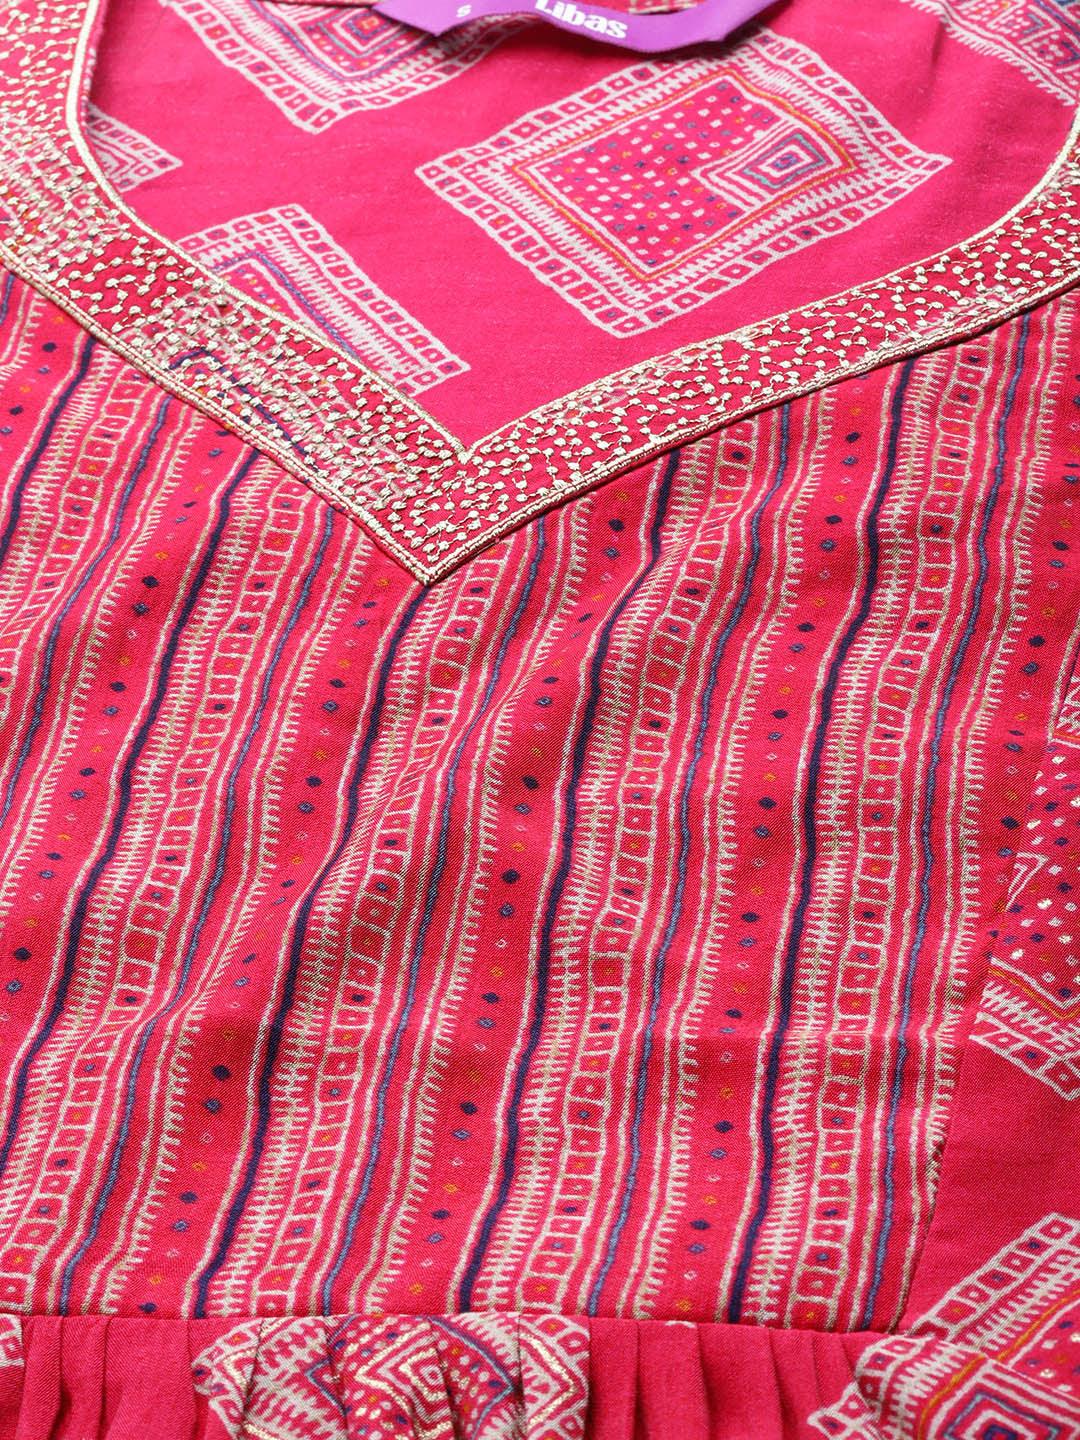 Pink Printed Chanderi Silk Kurta - Libas